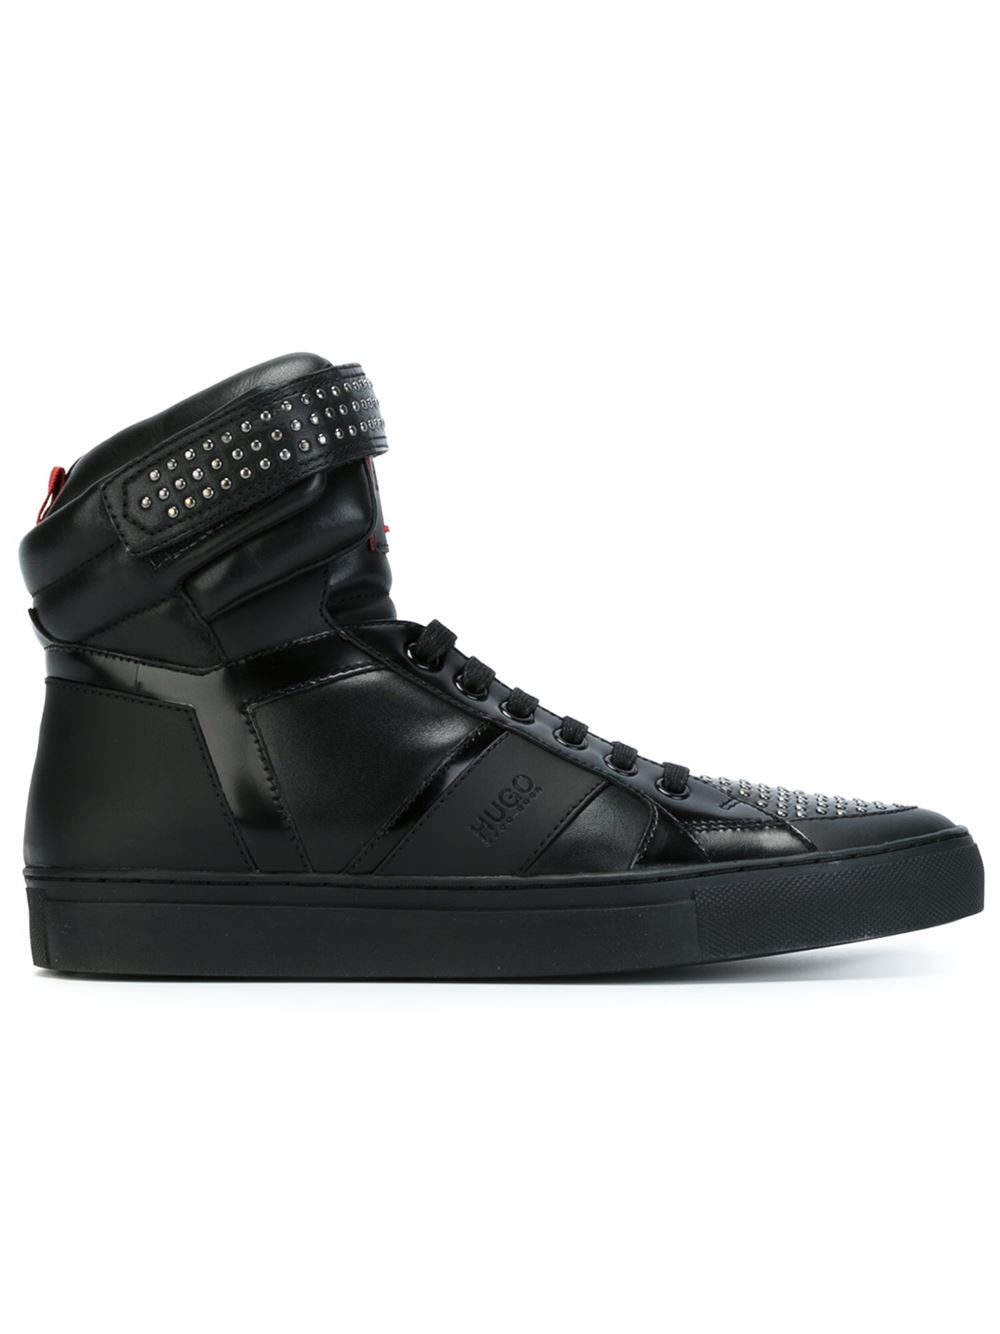 Hugo Hi-top Lace-up Sneakers in Black for Men - Lyst